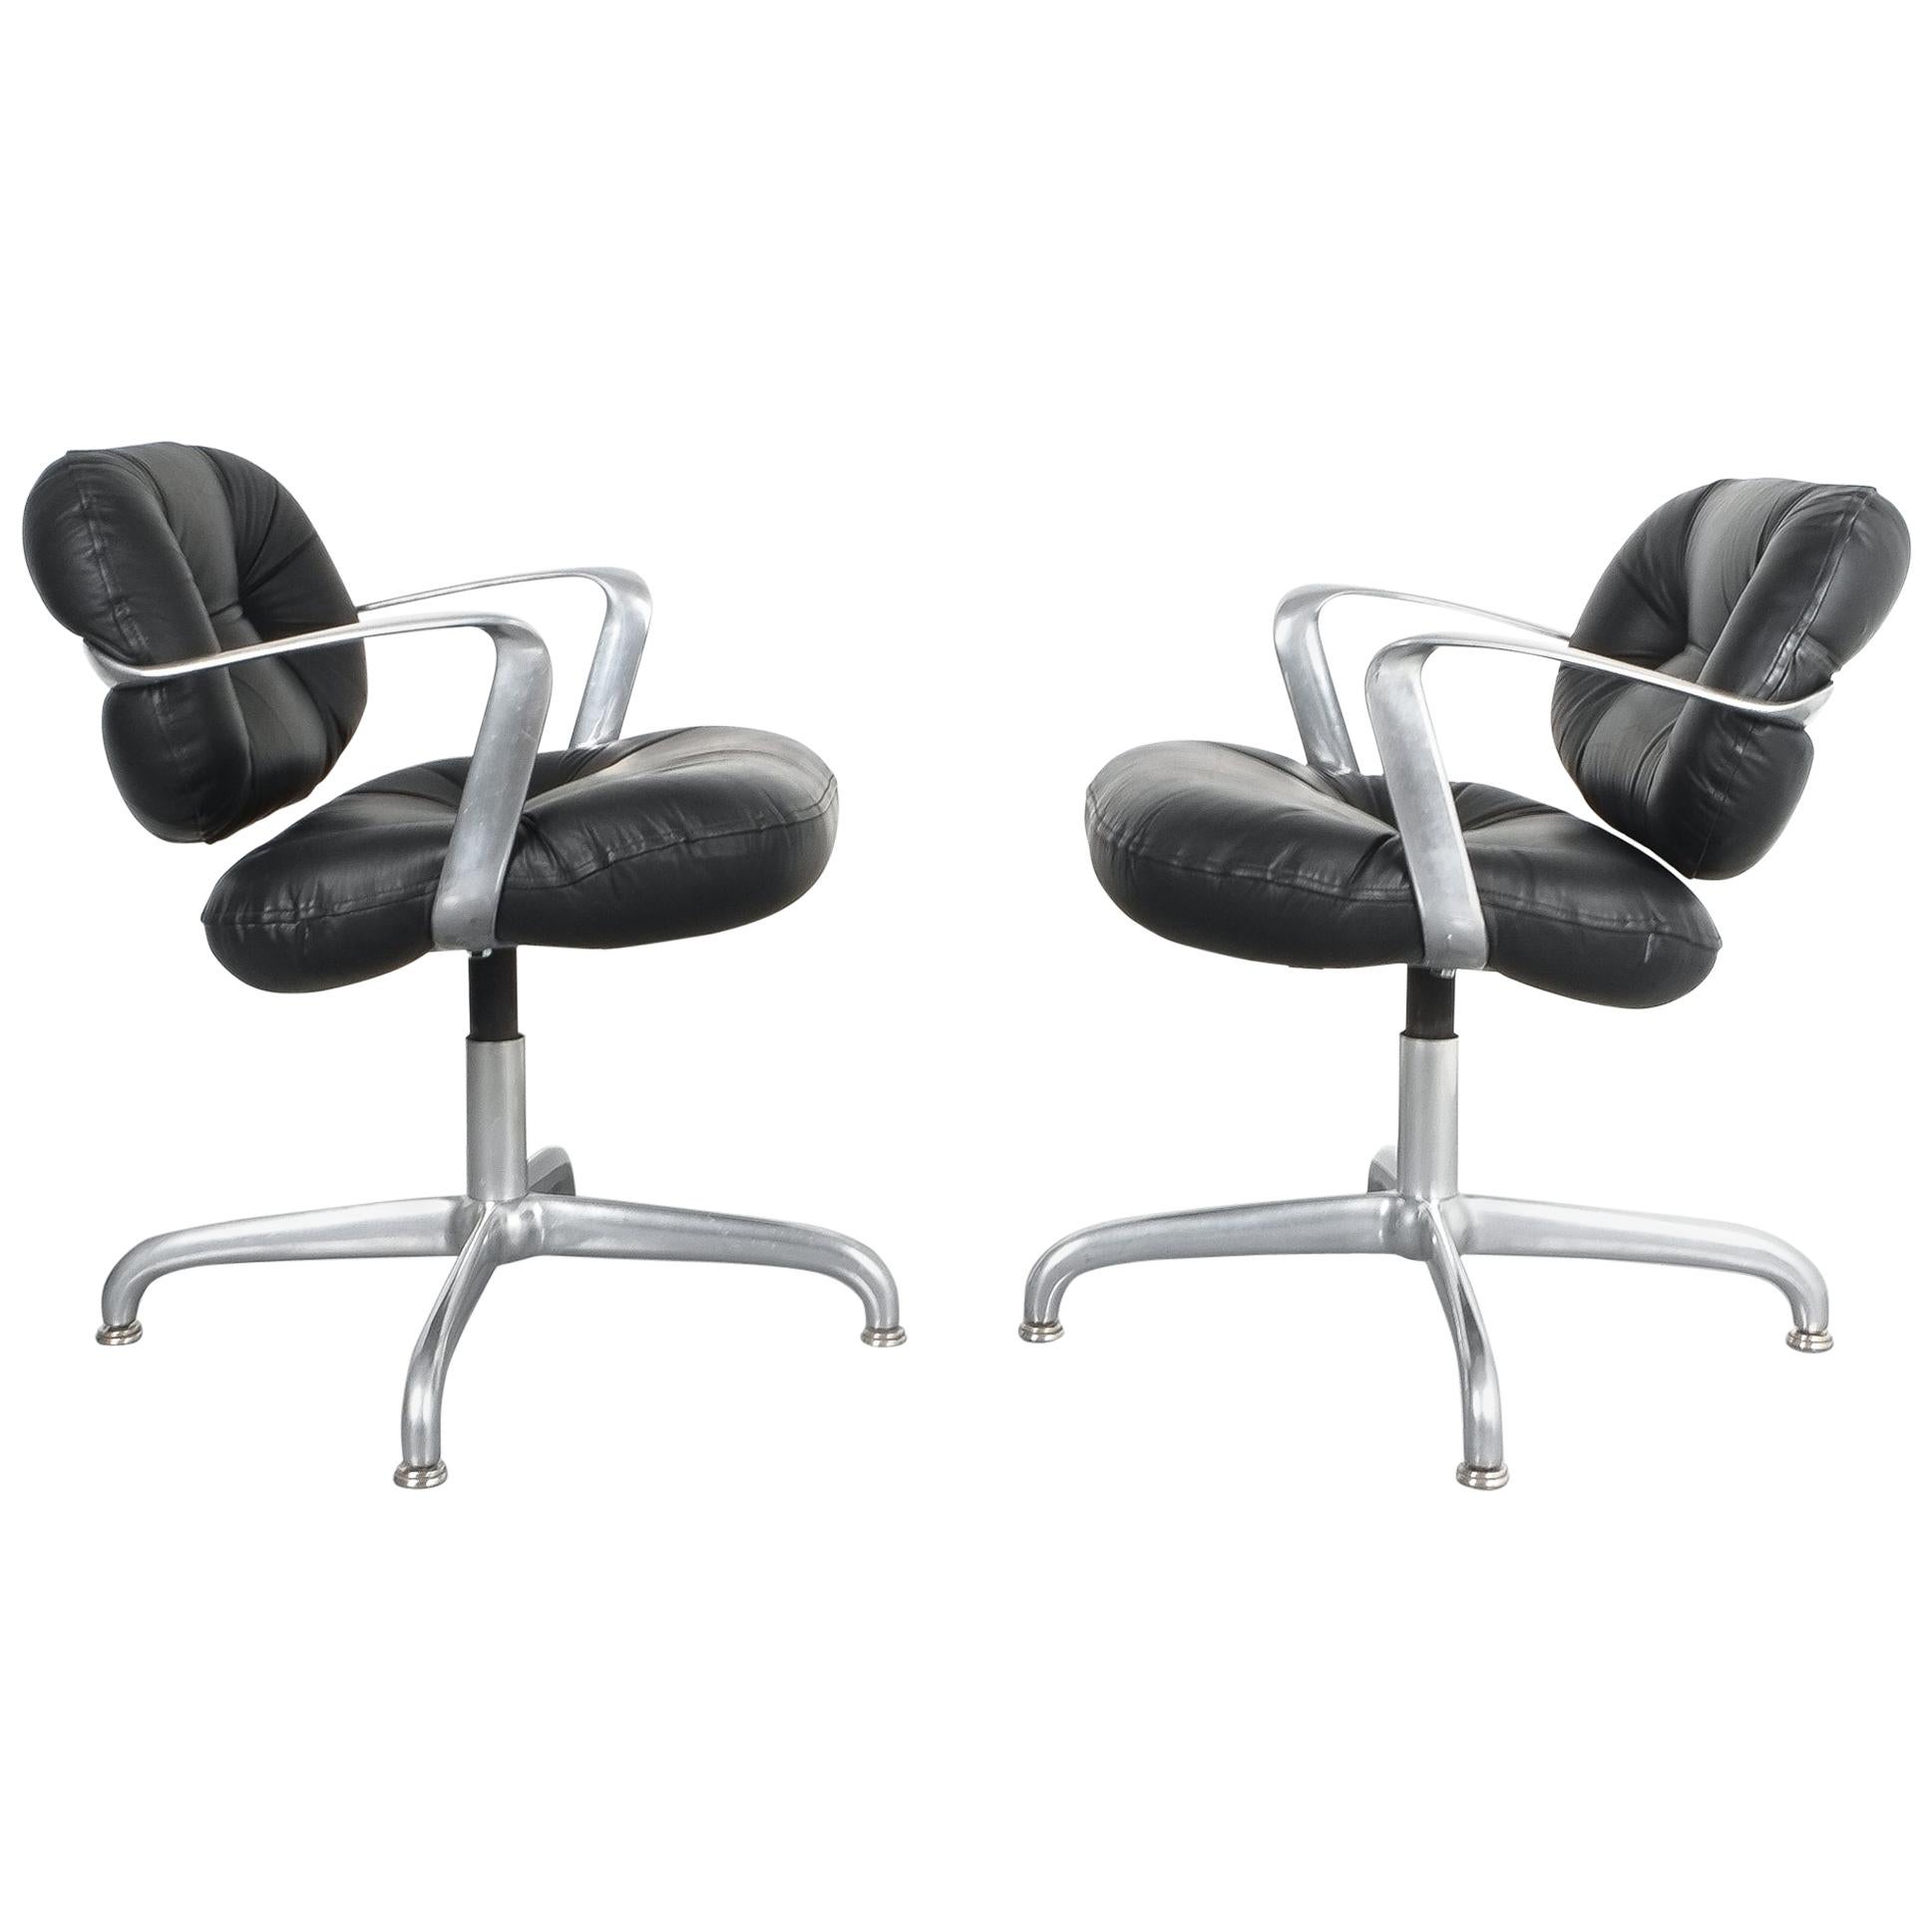 Pair of Morrison and Hannah Knoll Office Chair Aluminium Black Leather